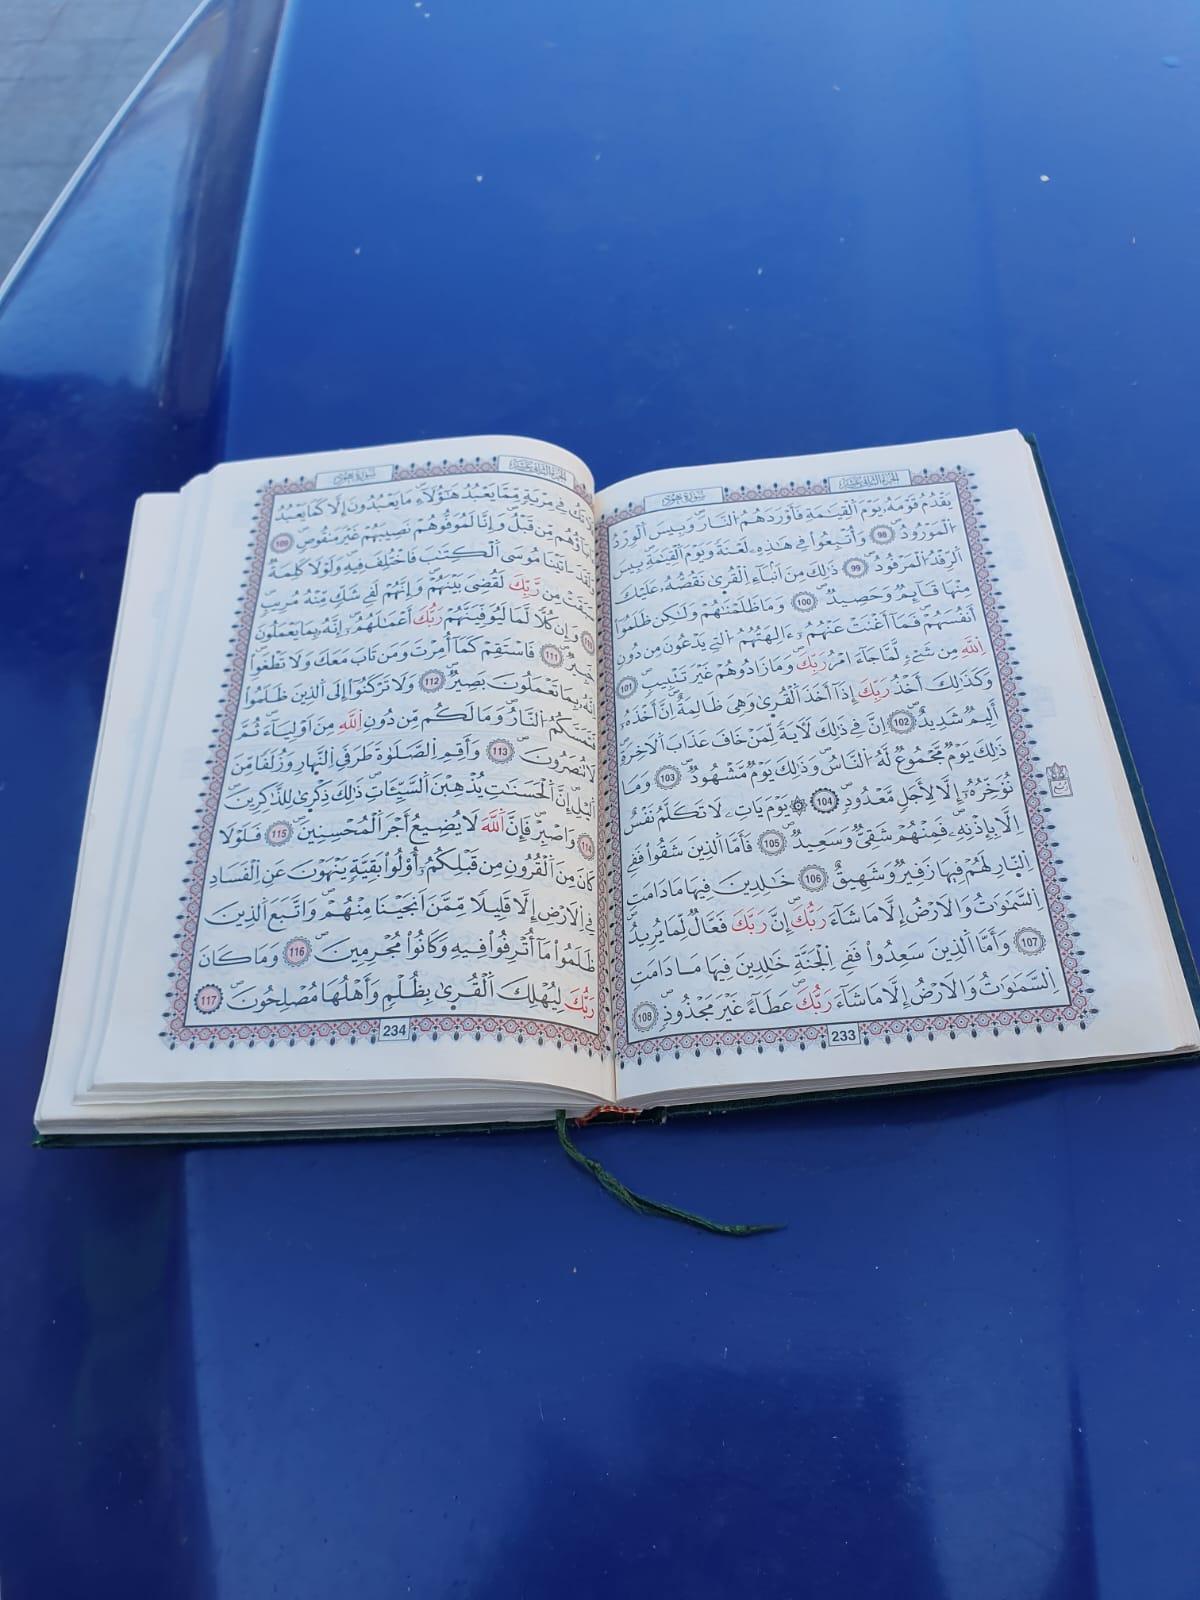 Ejemplar del Corán que ha aparecido junto a la bandera